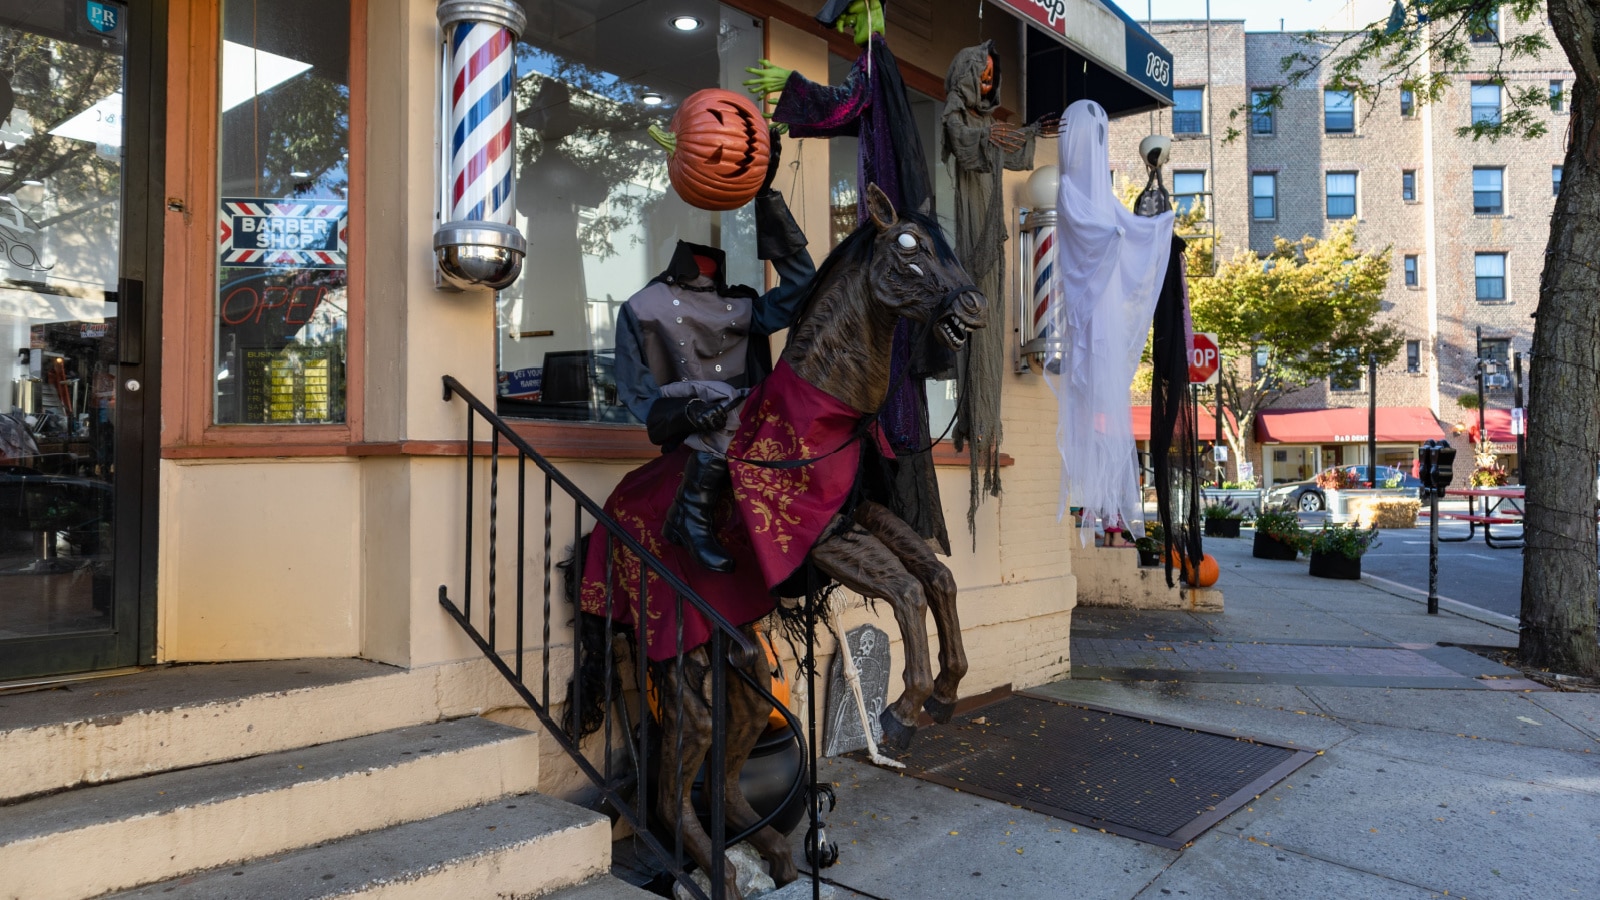 Sleepy Hollow, New York USA - October 19 2021: Headless Horseman Halloween Decorations at a Barbershop in Downtown Sleepy Hollow New York